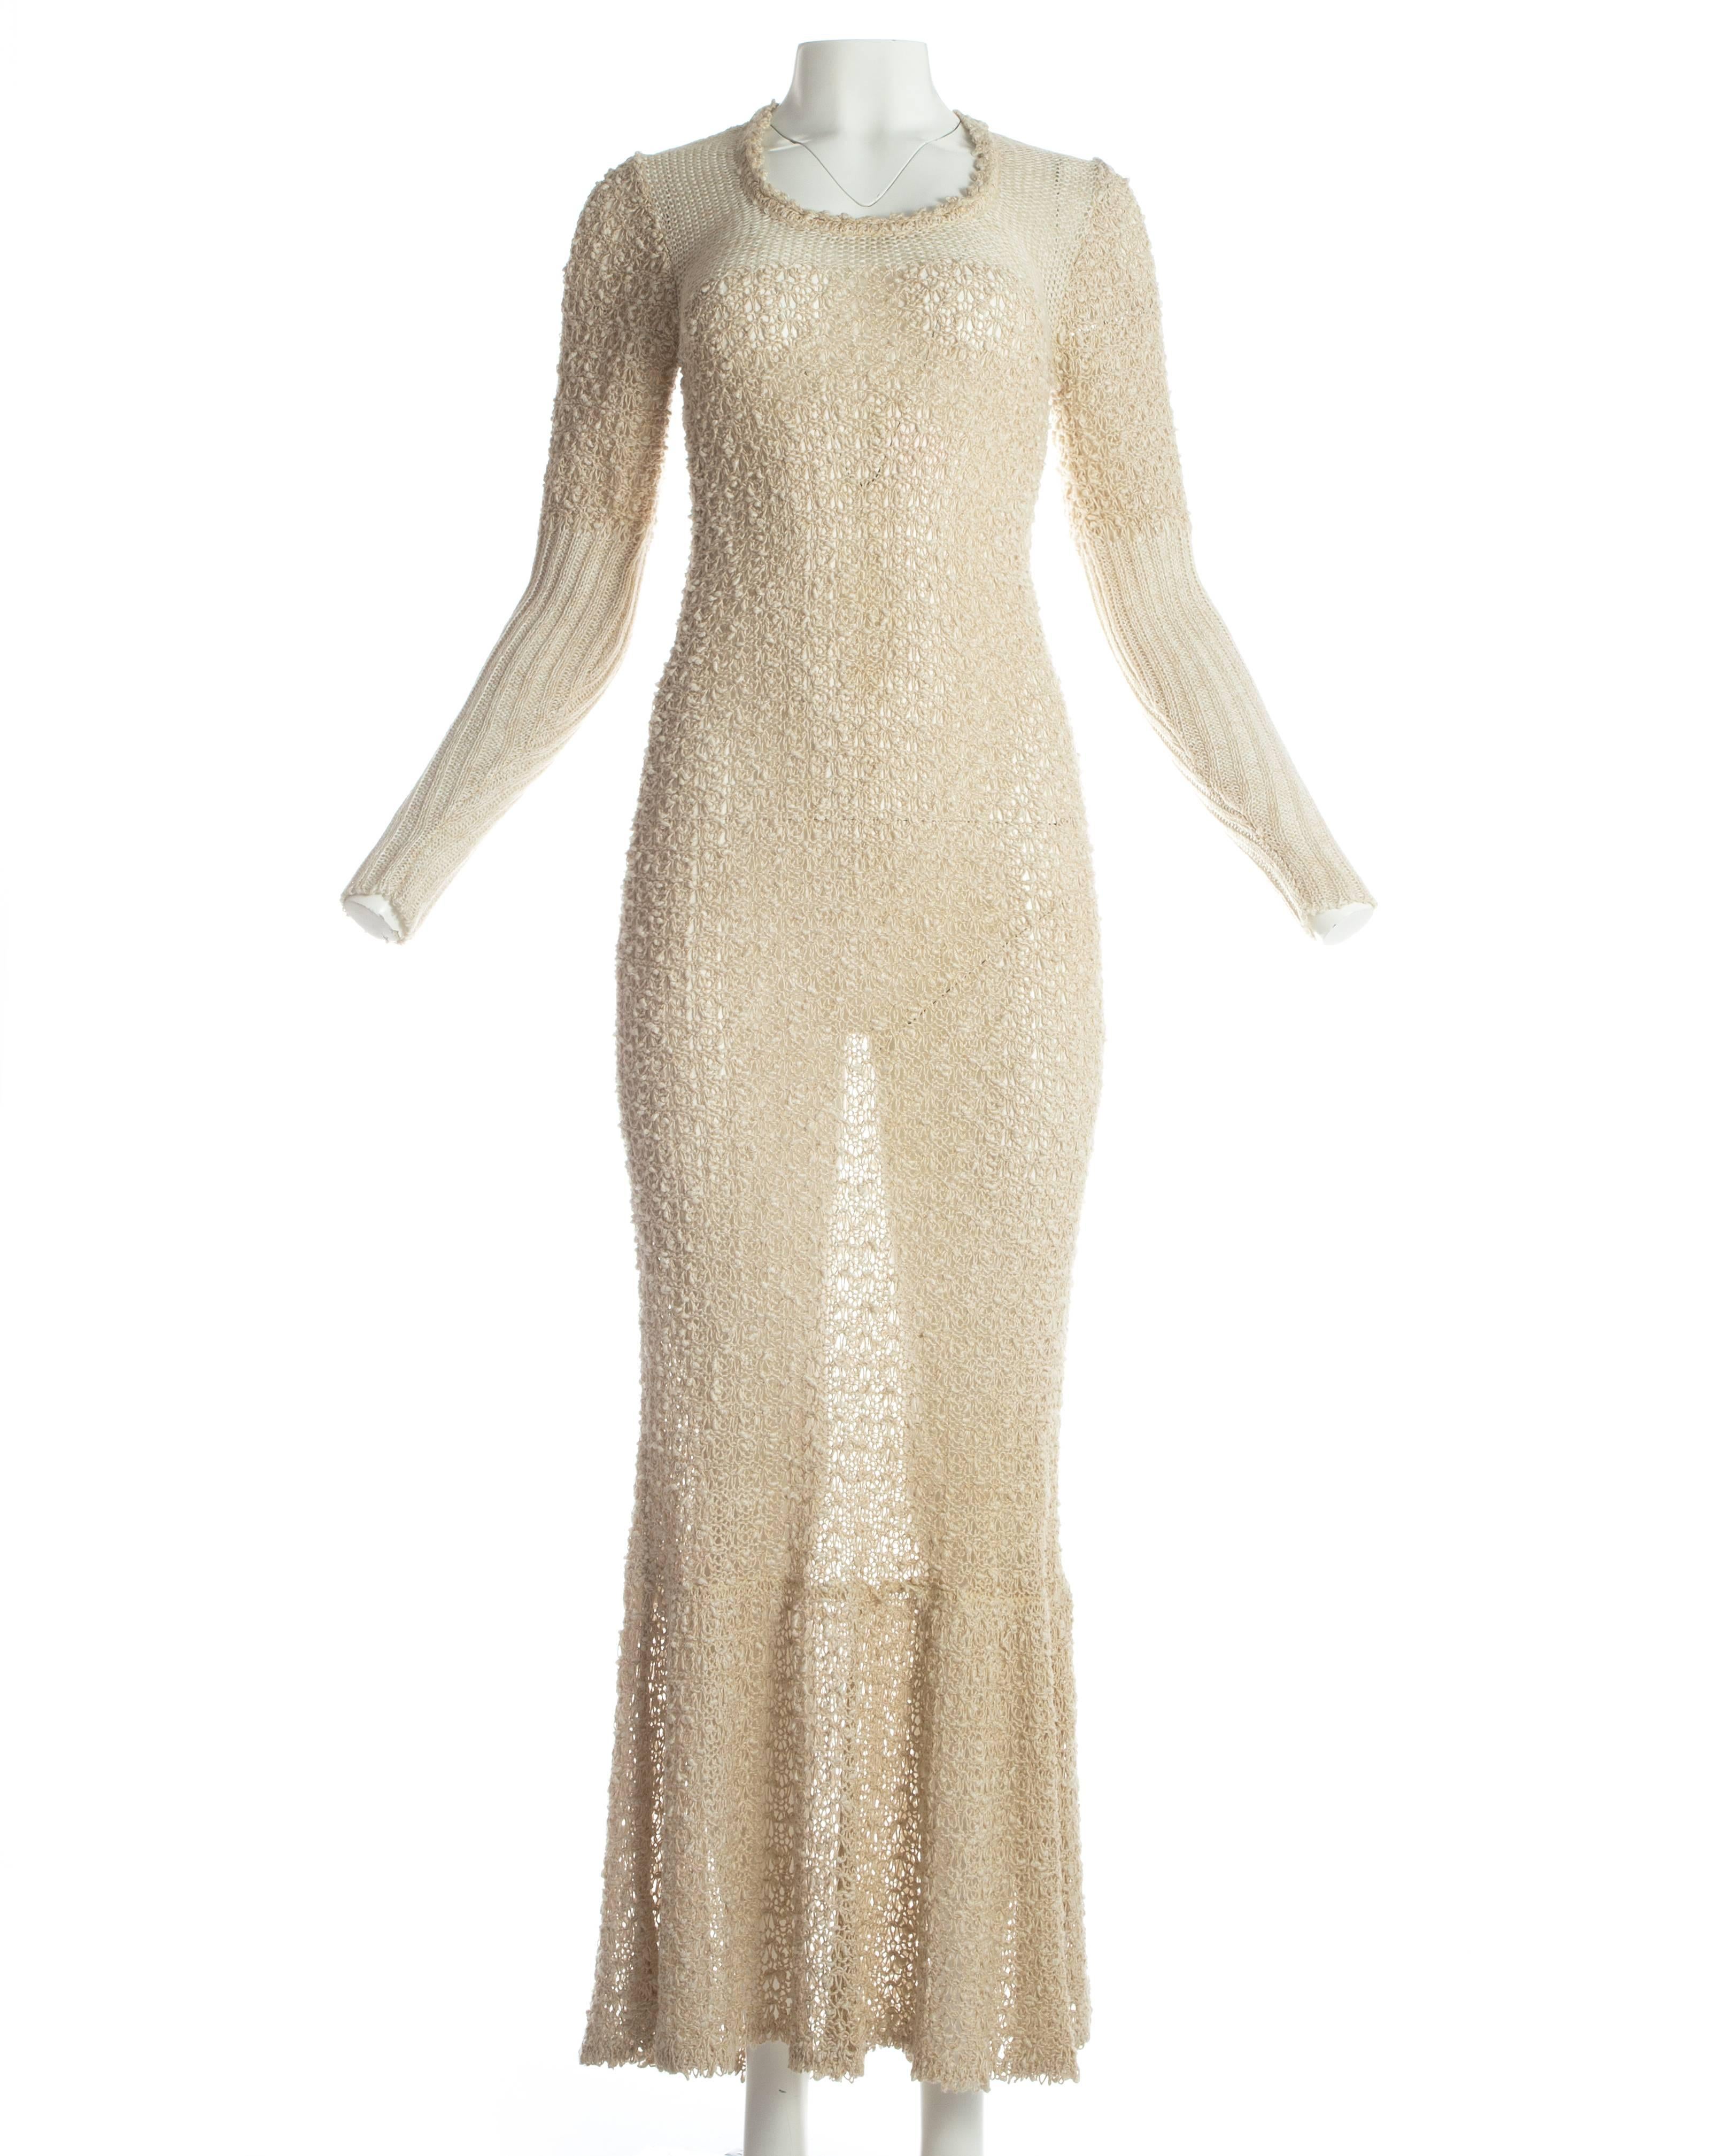 Beige Hand loomed Irish linen summer maxi dress, c. 1970